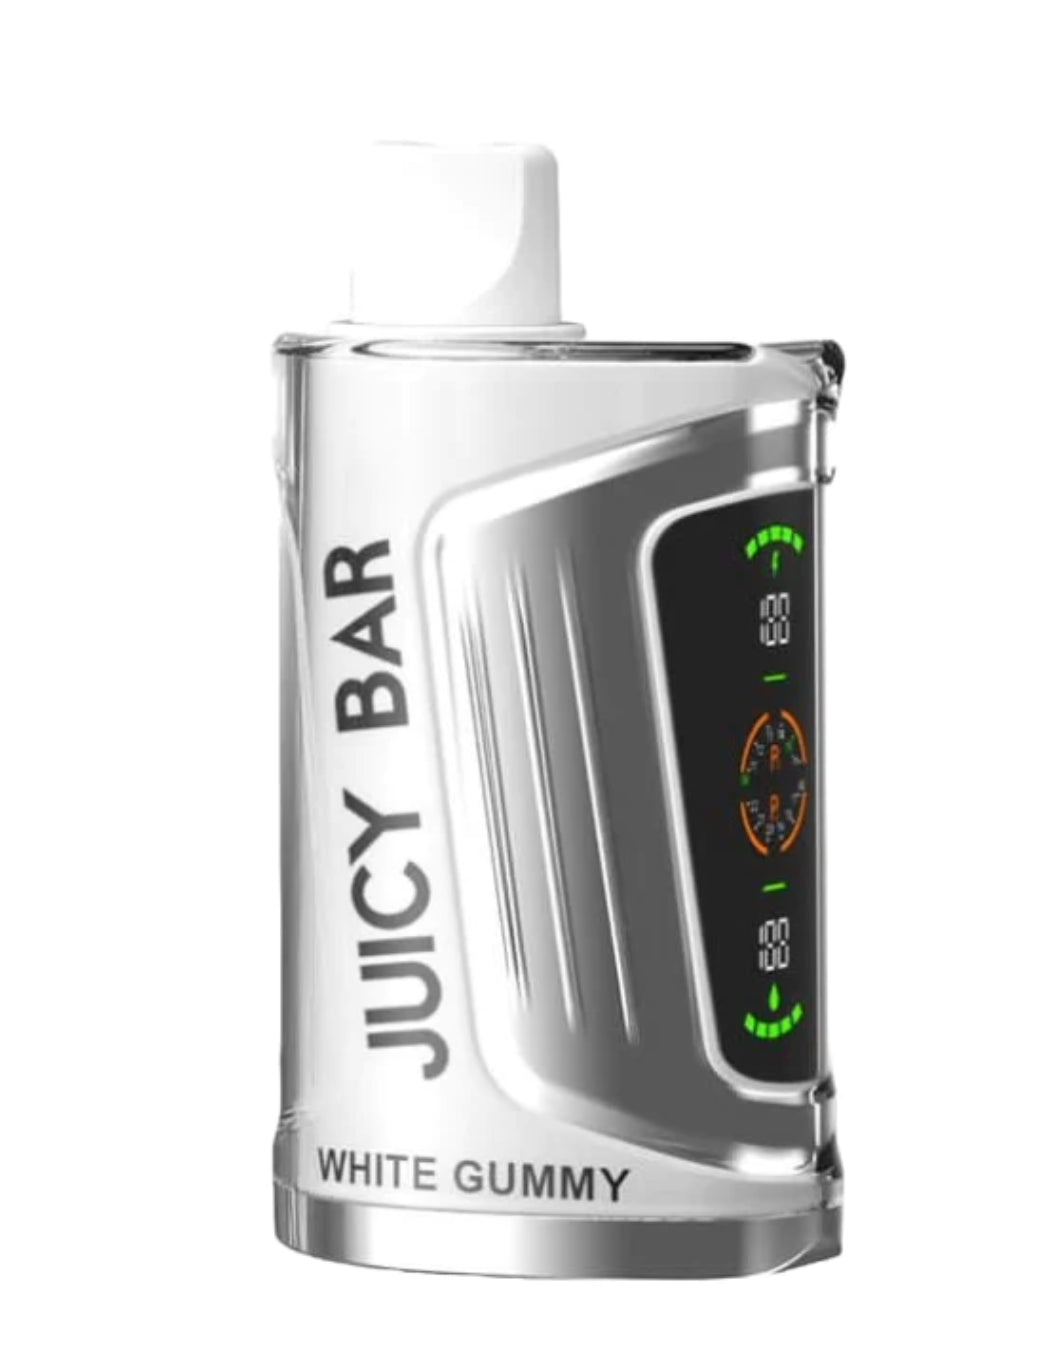 Juicy Bar JB15000 Pro Max - Disposable Vape (5% - 15000 Puffs) - MK Distro